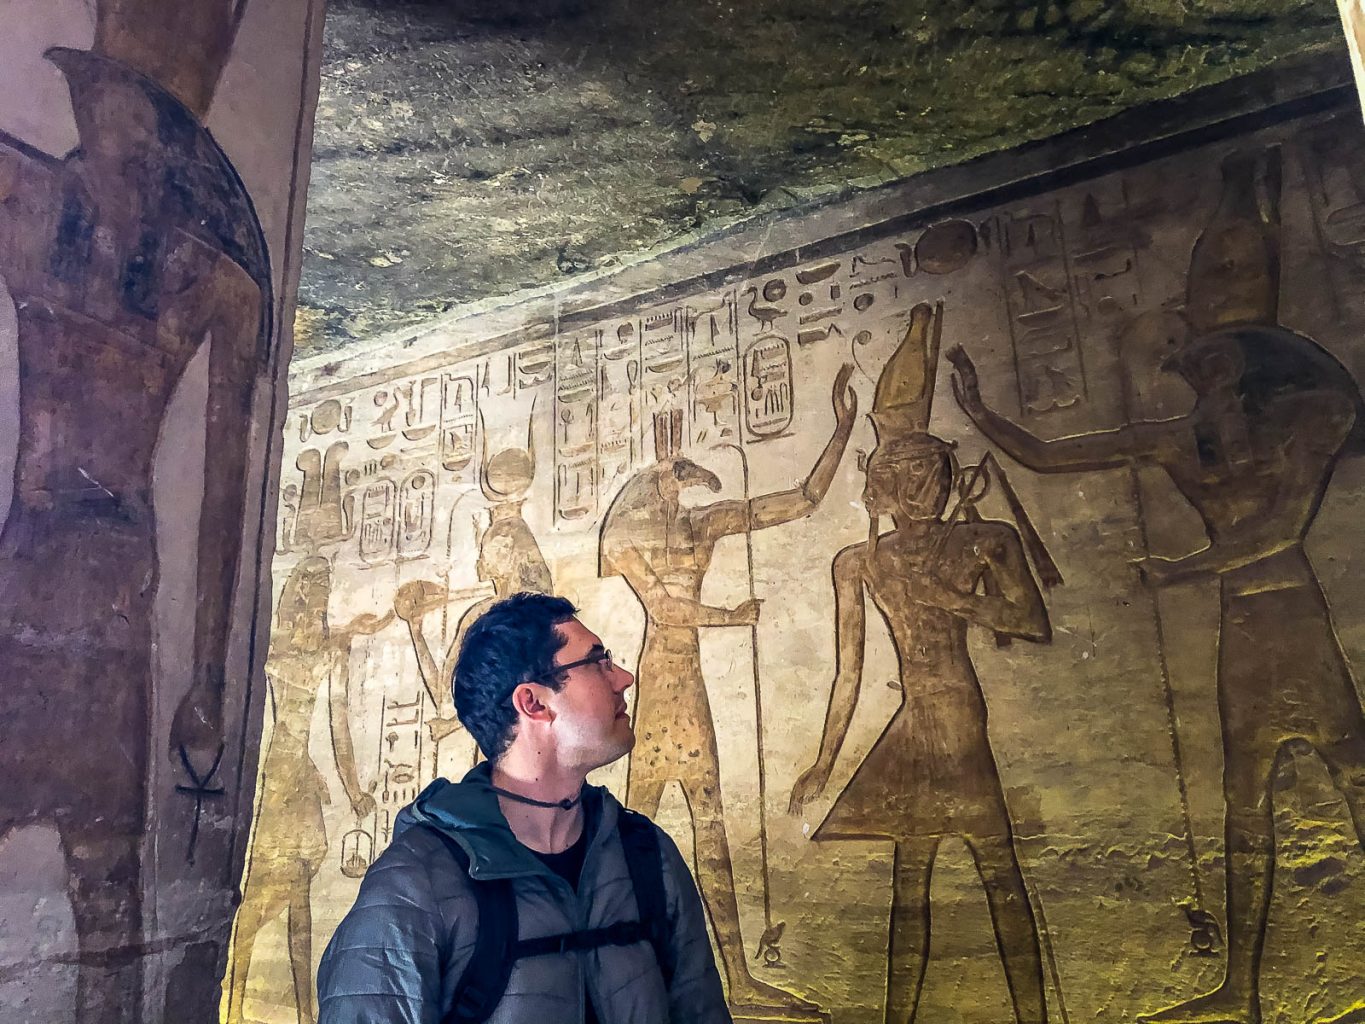 Carlos inside the temple of Abu Simbel